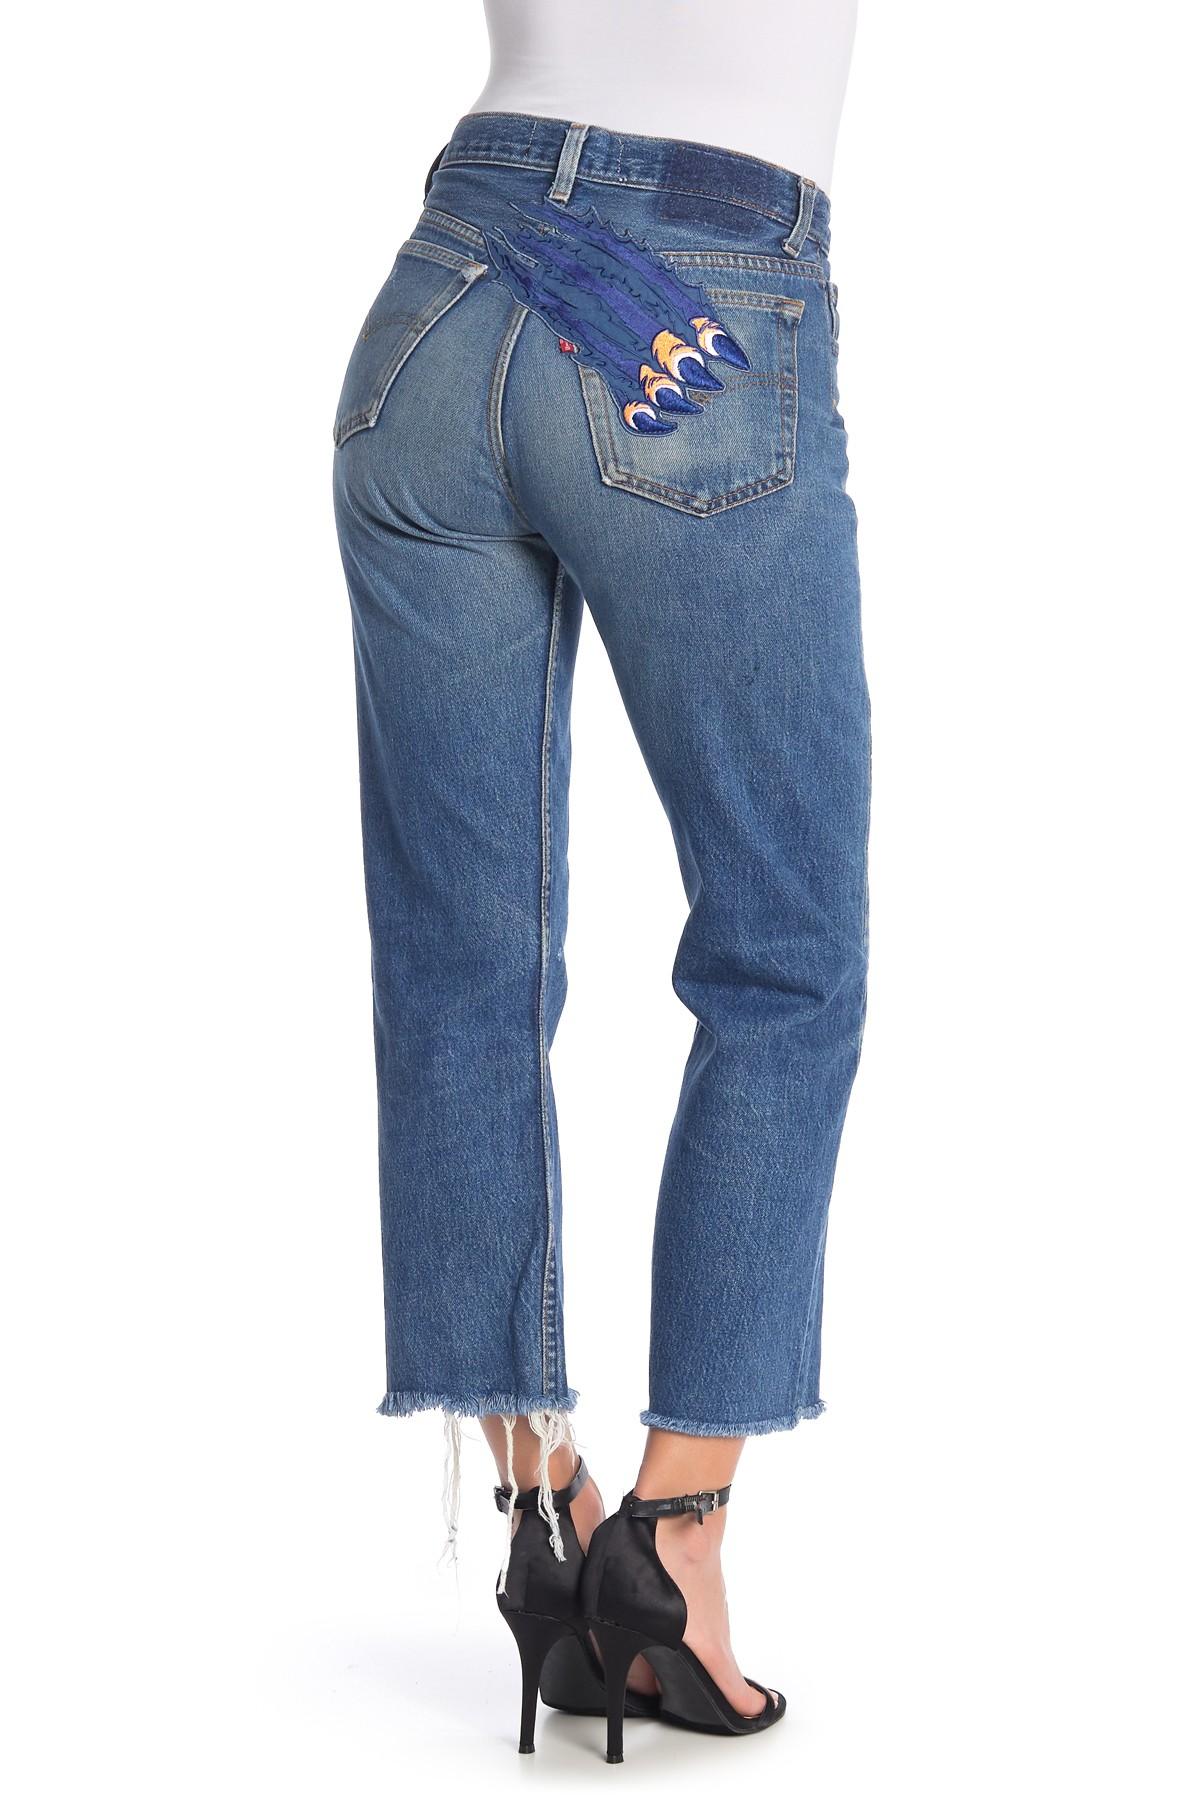 Kendall + Kylie Denim Slash Vintage Jeans in Blue - Lyst